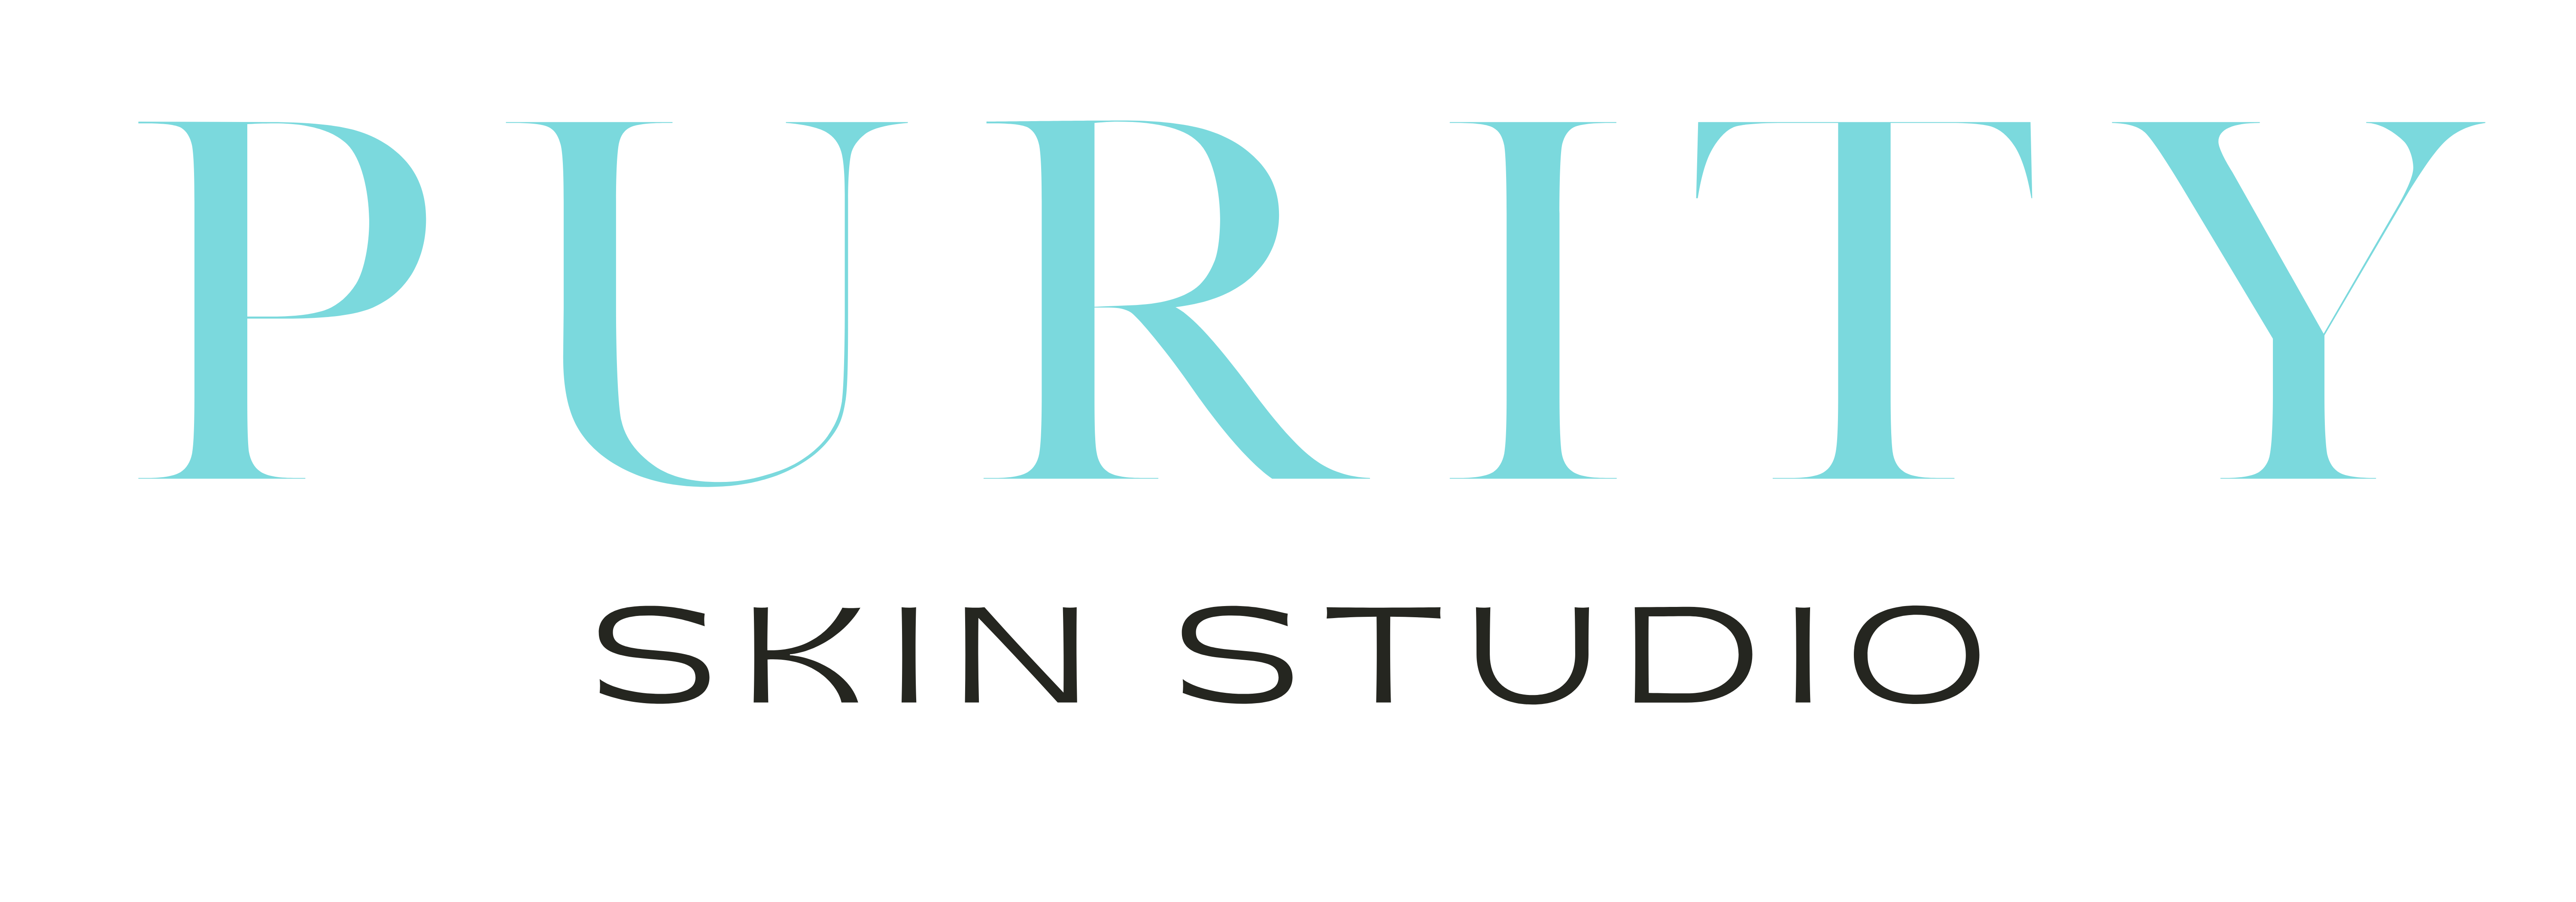 Thank you Purity Skin Studio